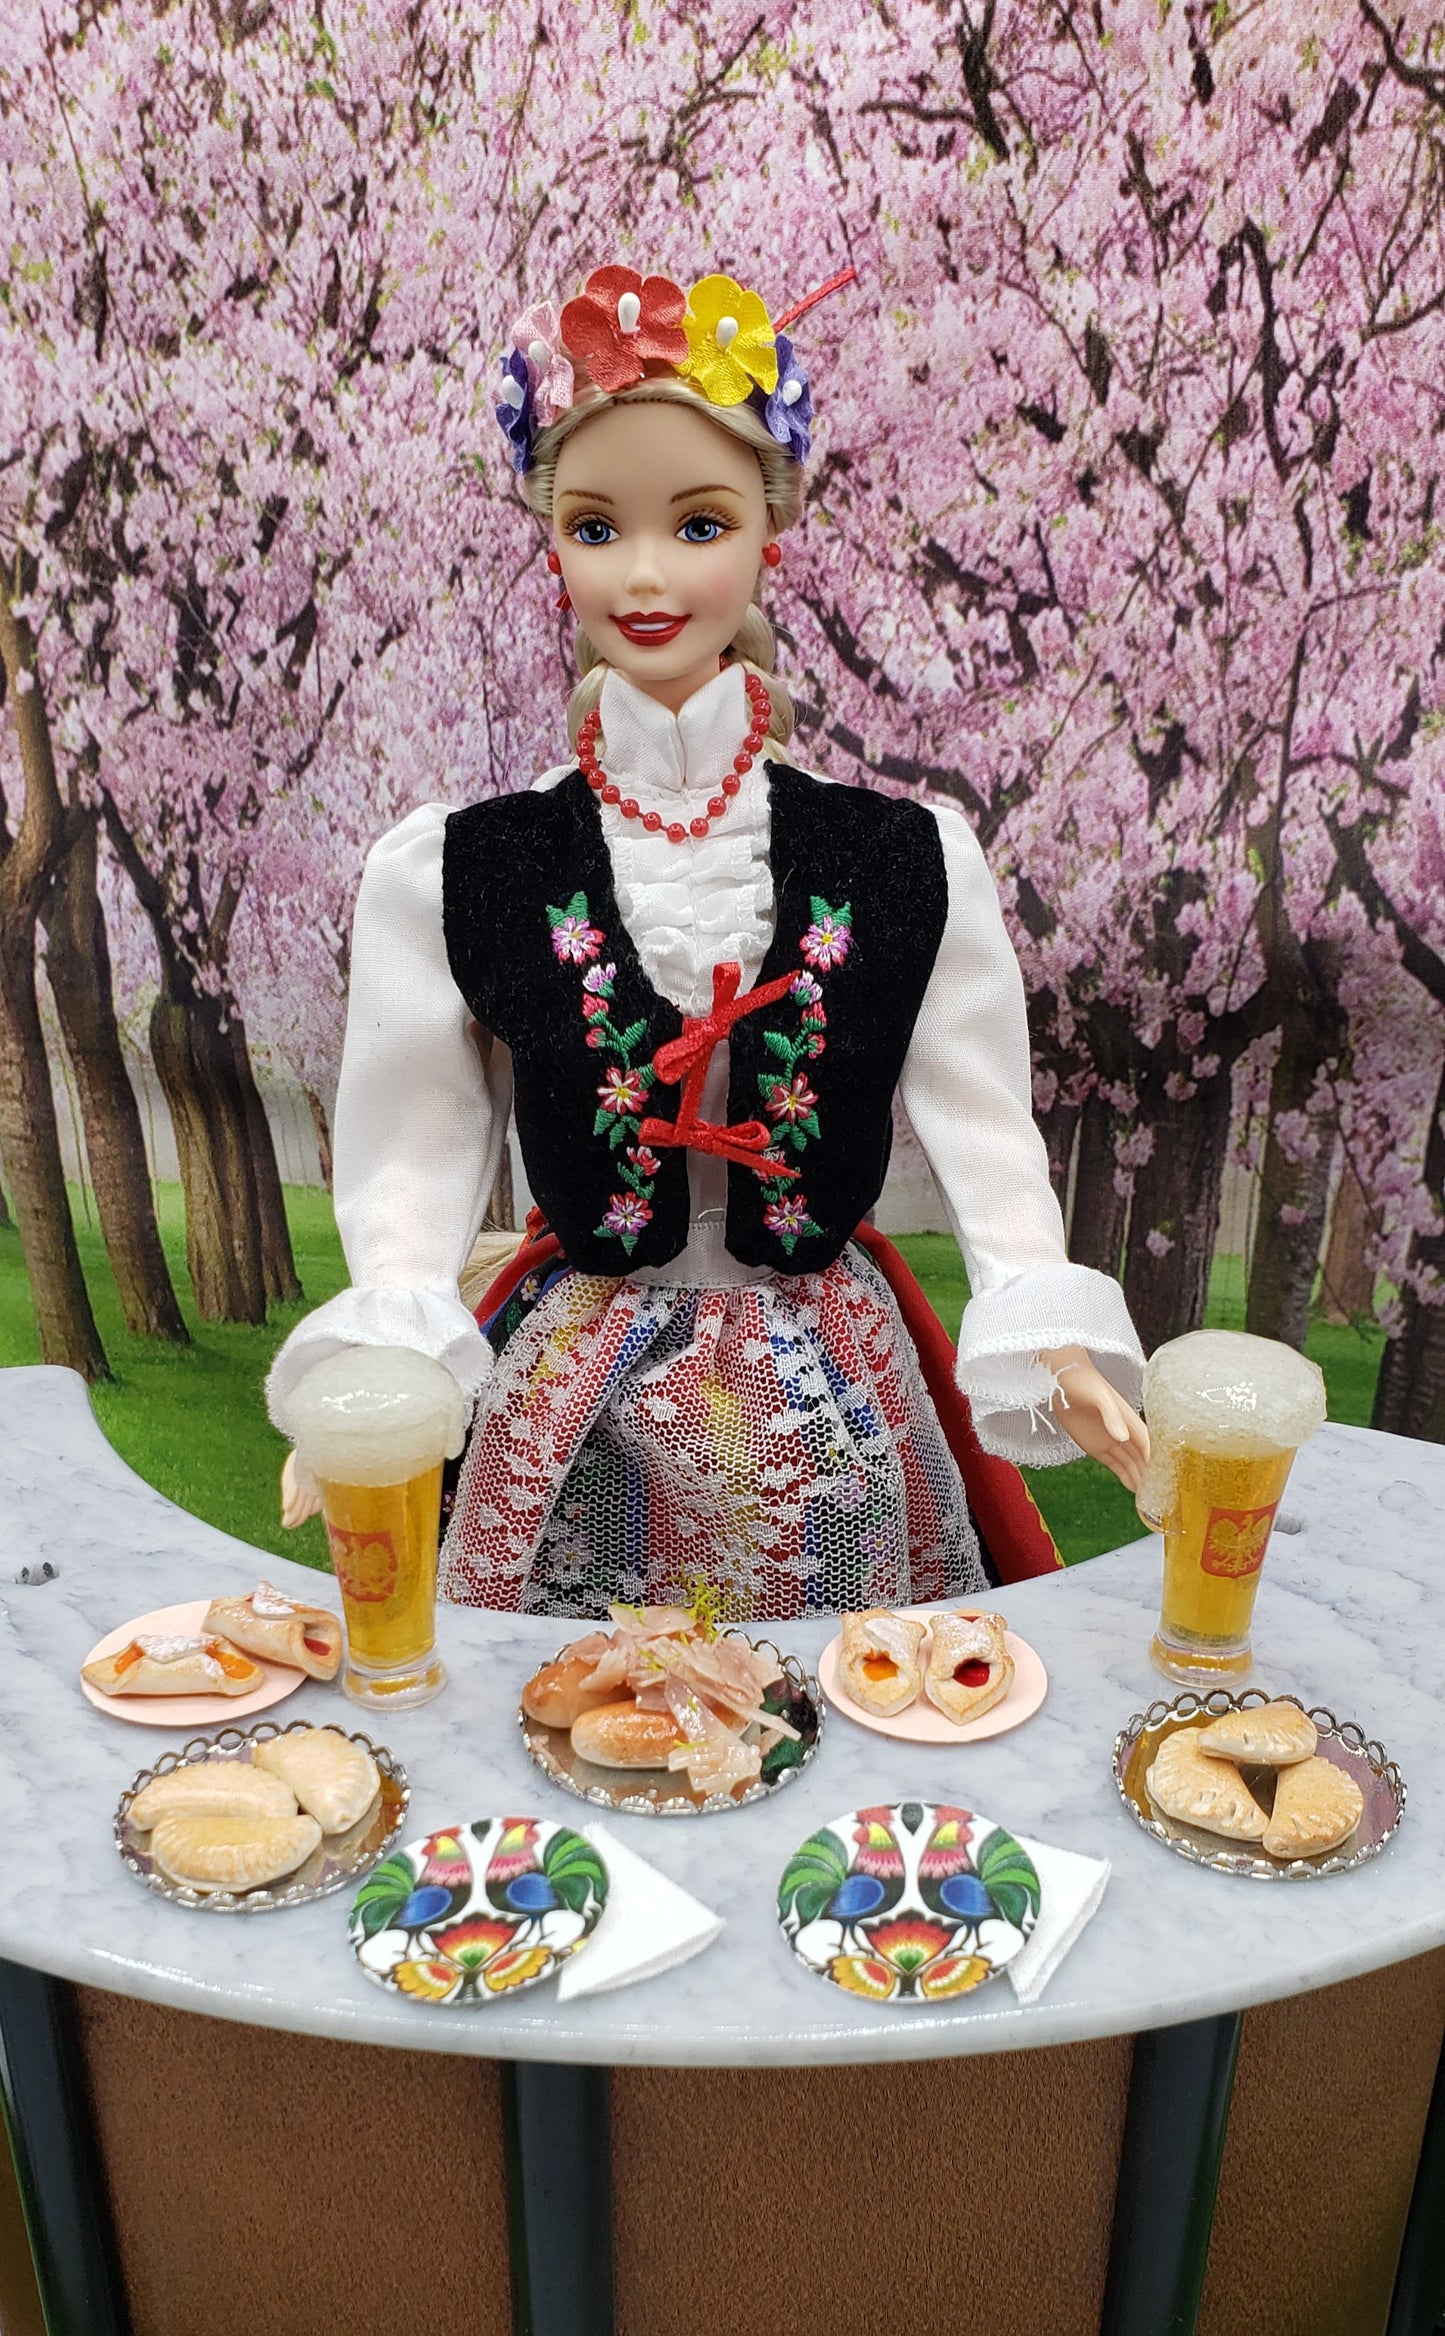 Barbie with polish food